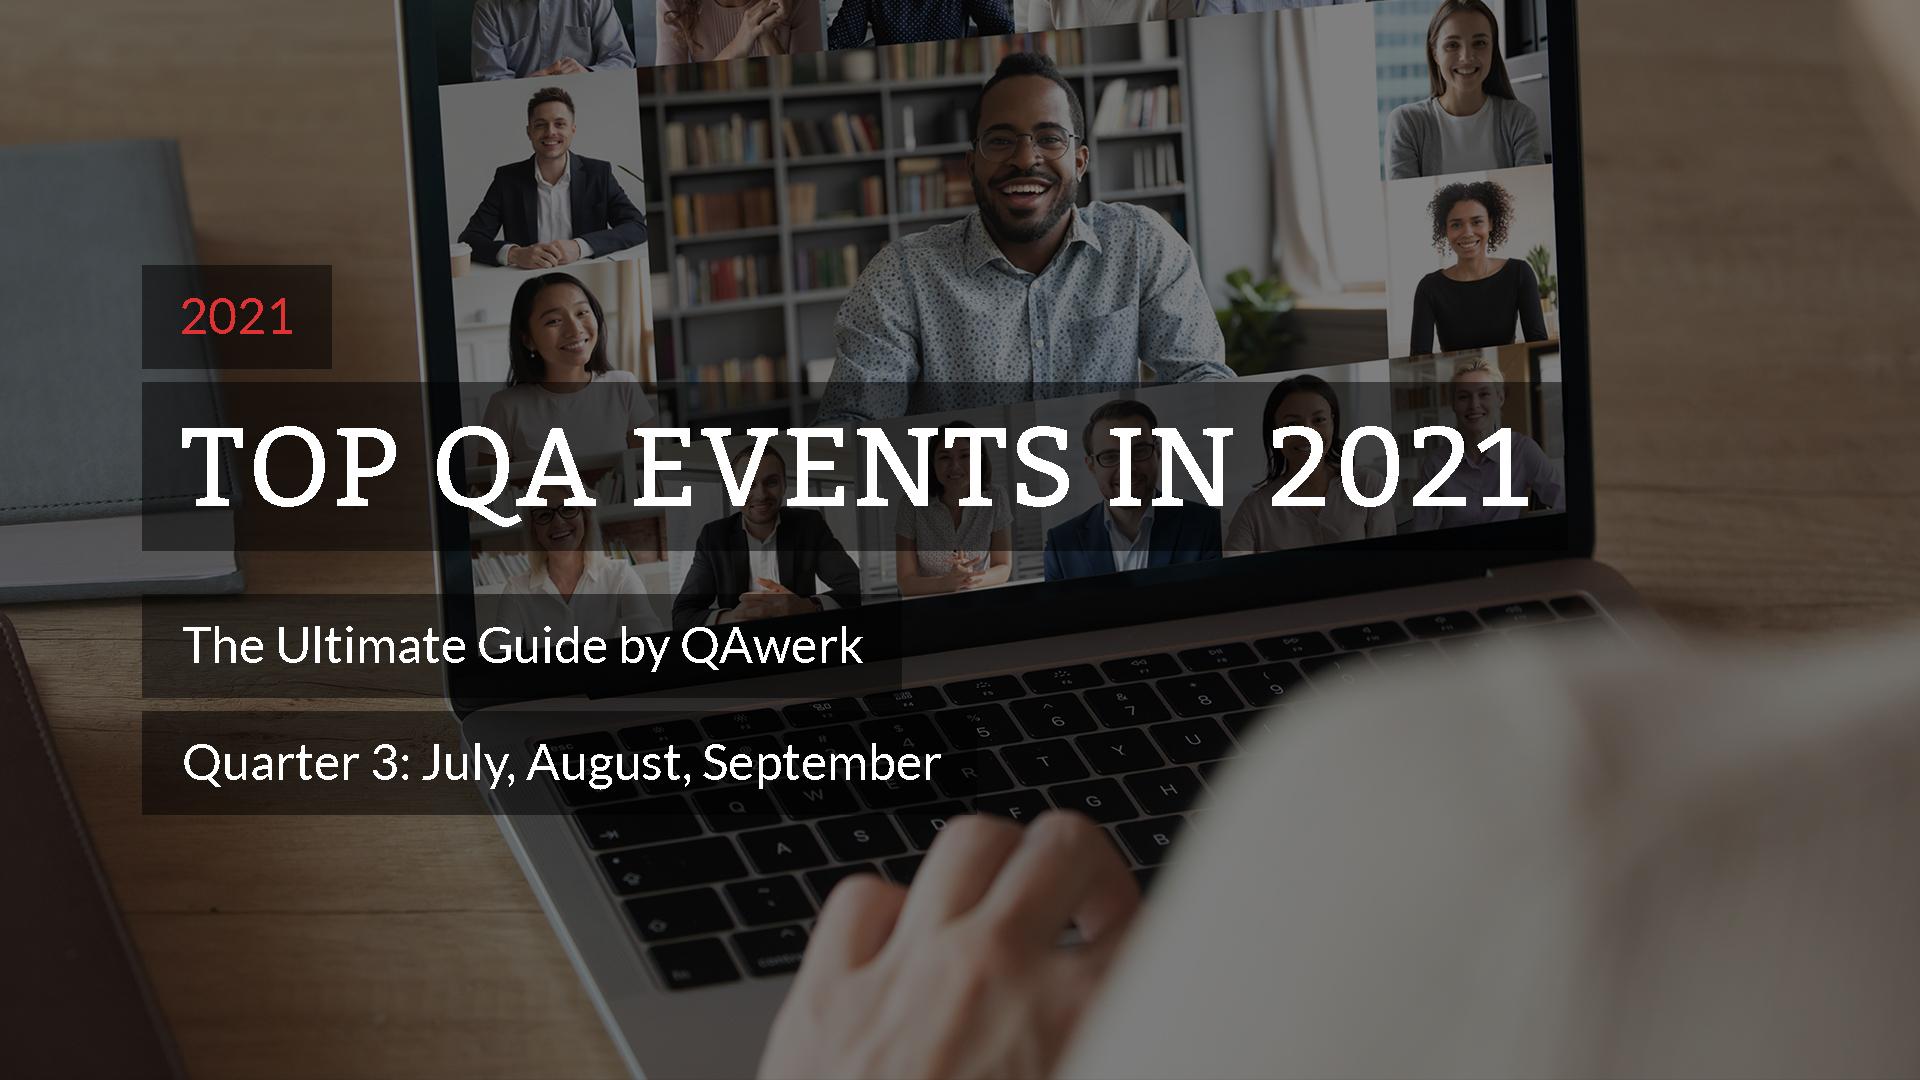 Top QA Events in 2021: Quarter 3 Ultimate Guide